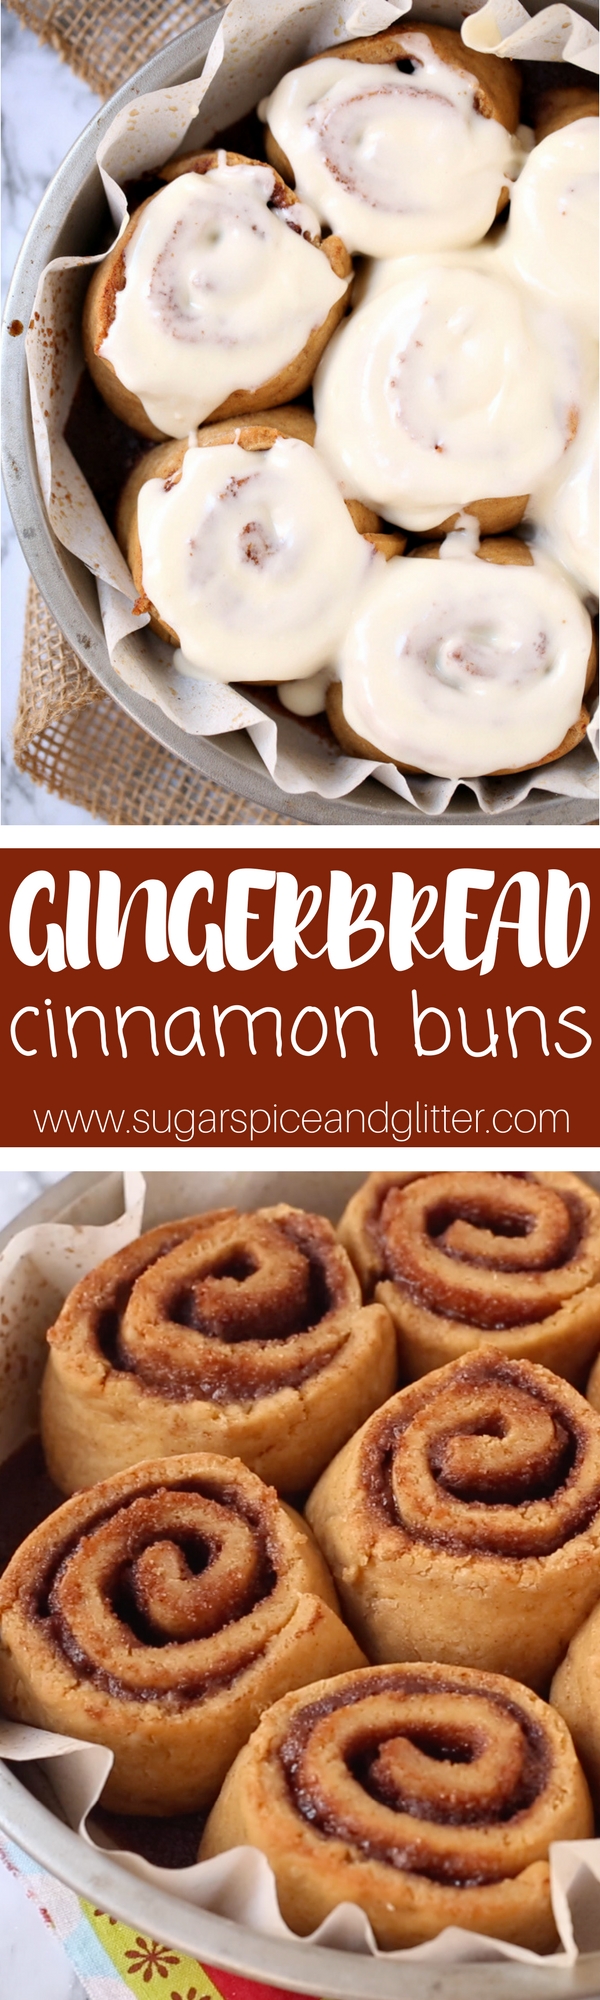 Gingerbread Cinnamon Buns